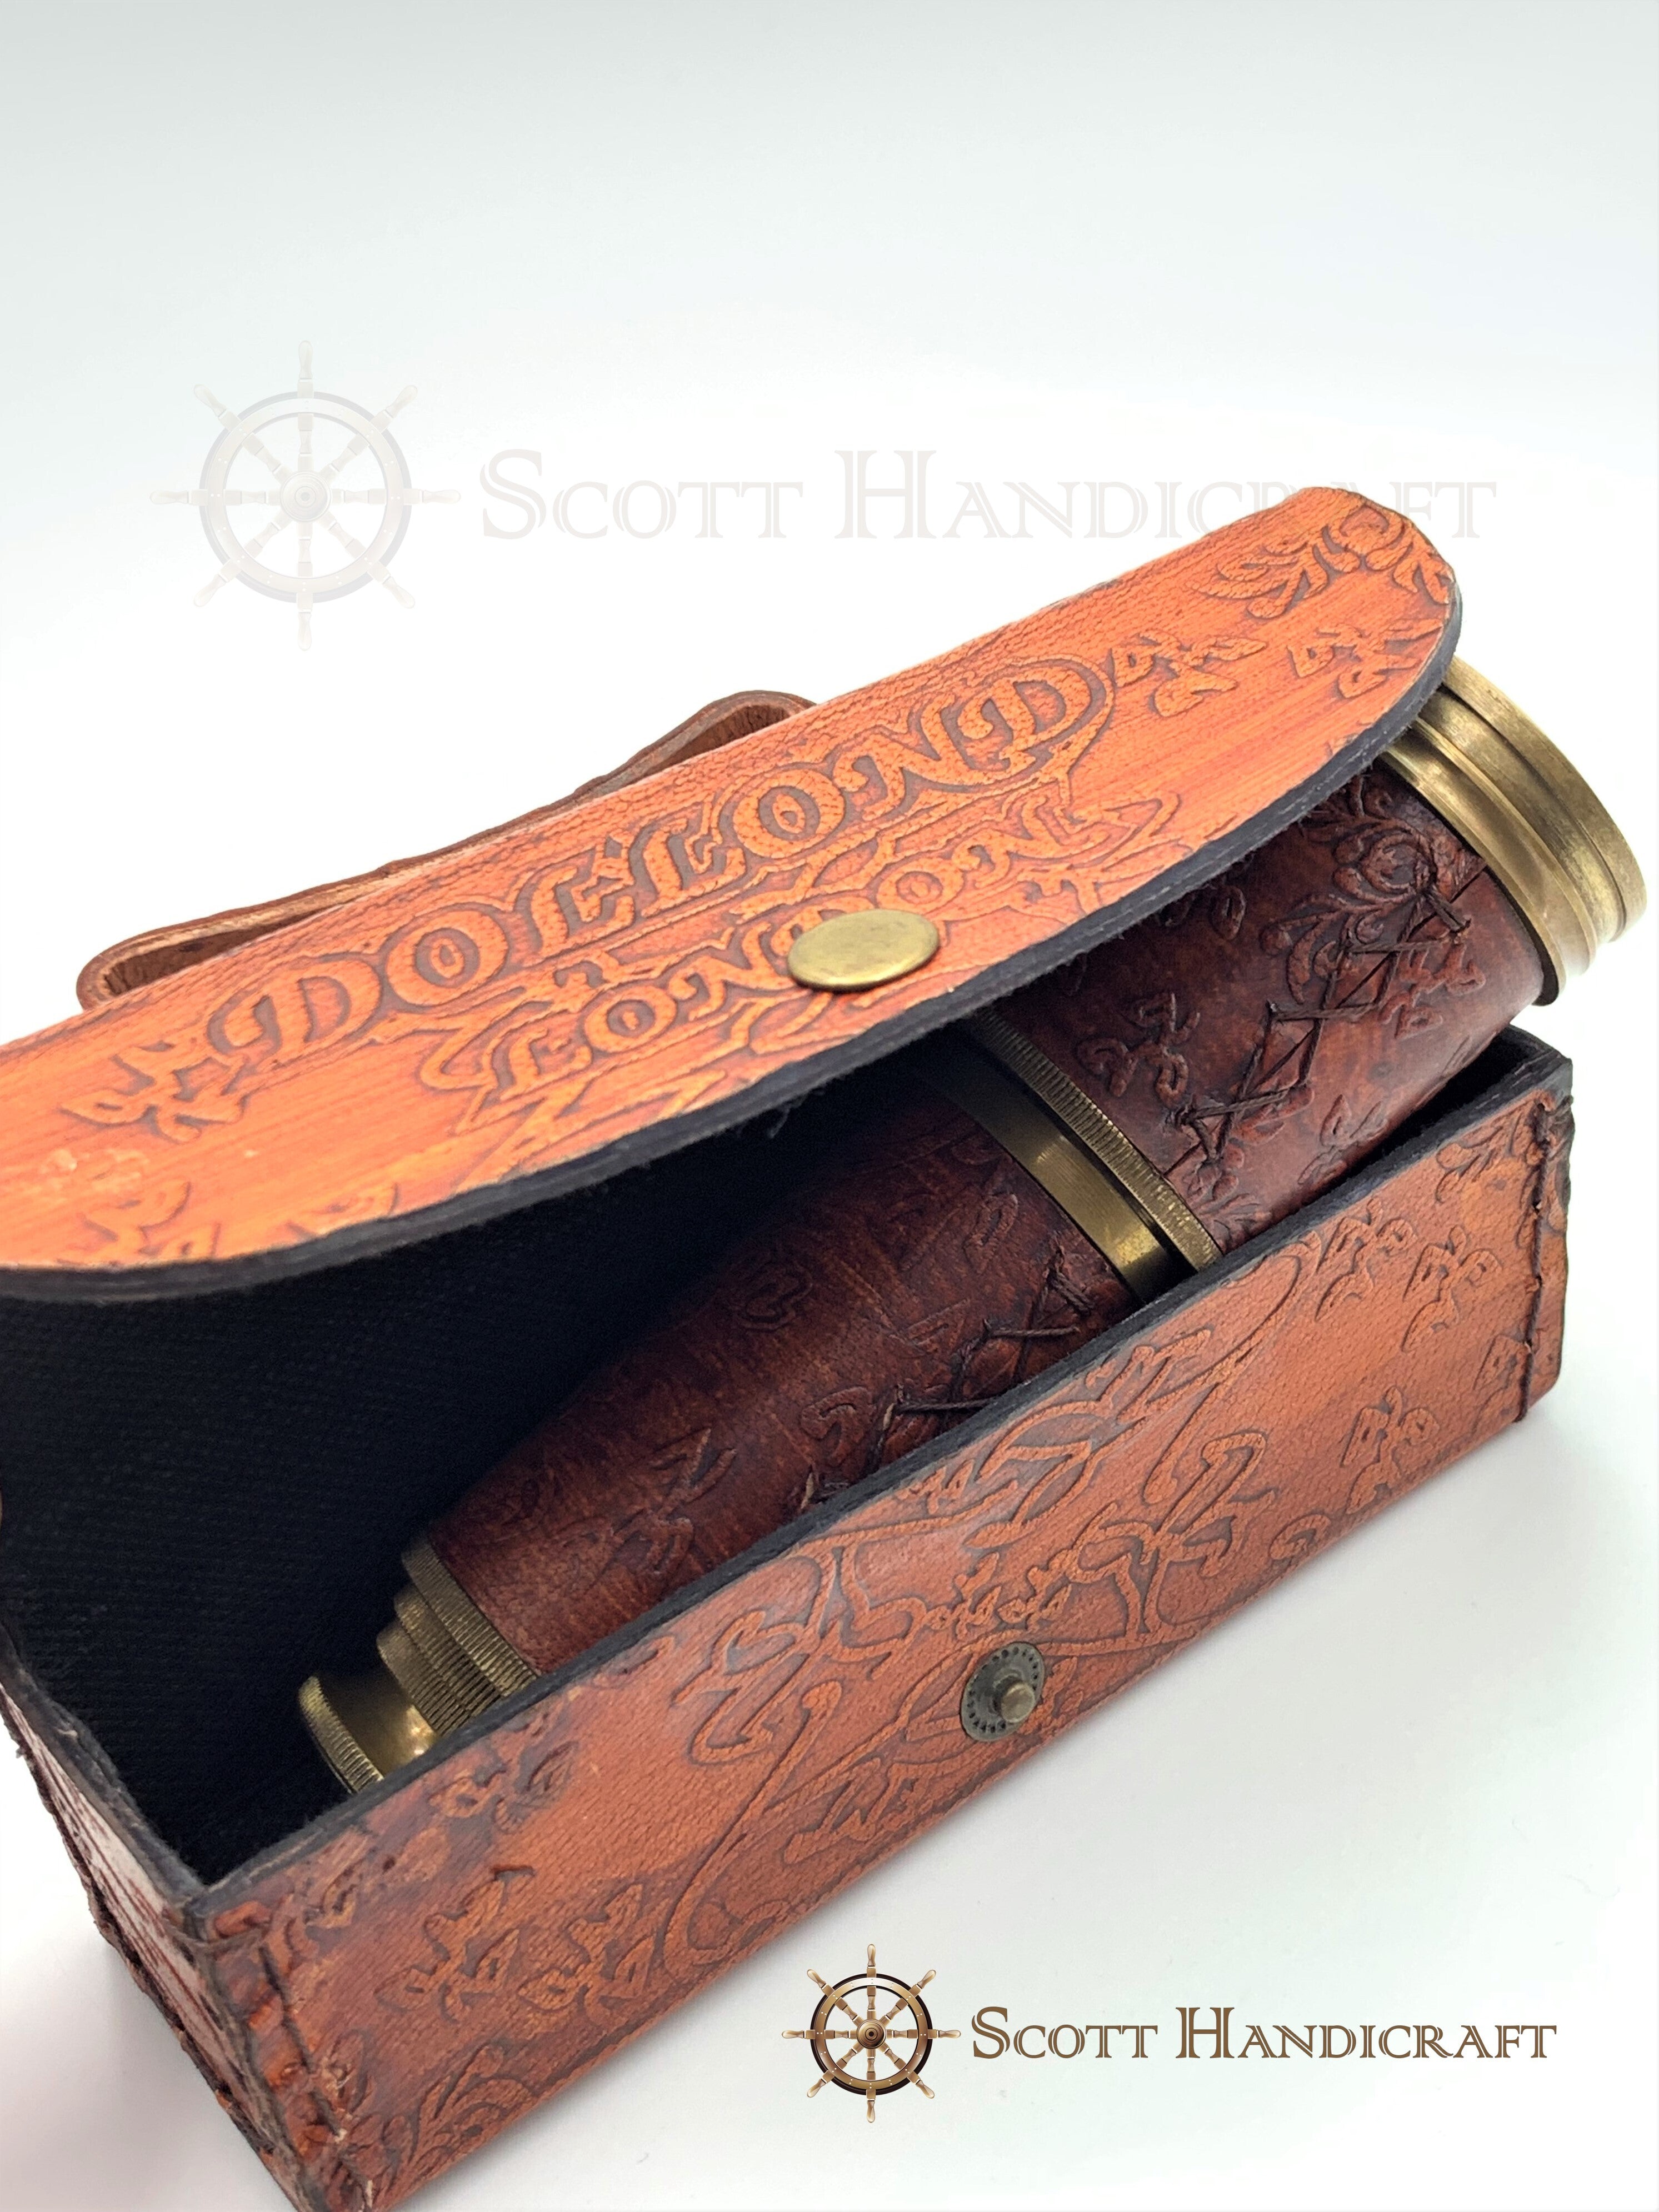 Scott Handicraft-Brass & Leather Dolland London 1920  model Nautical Telescope with Leather Box